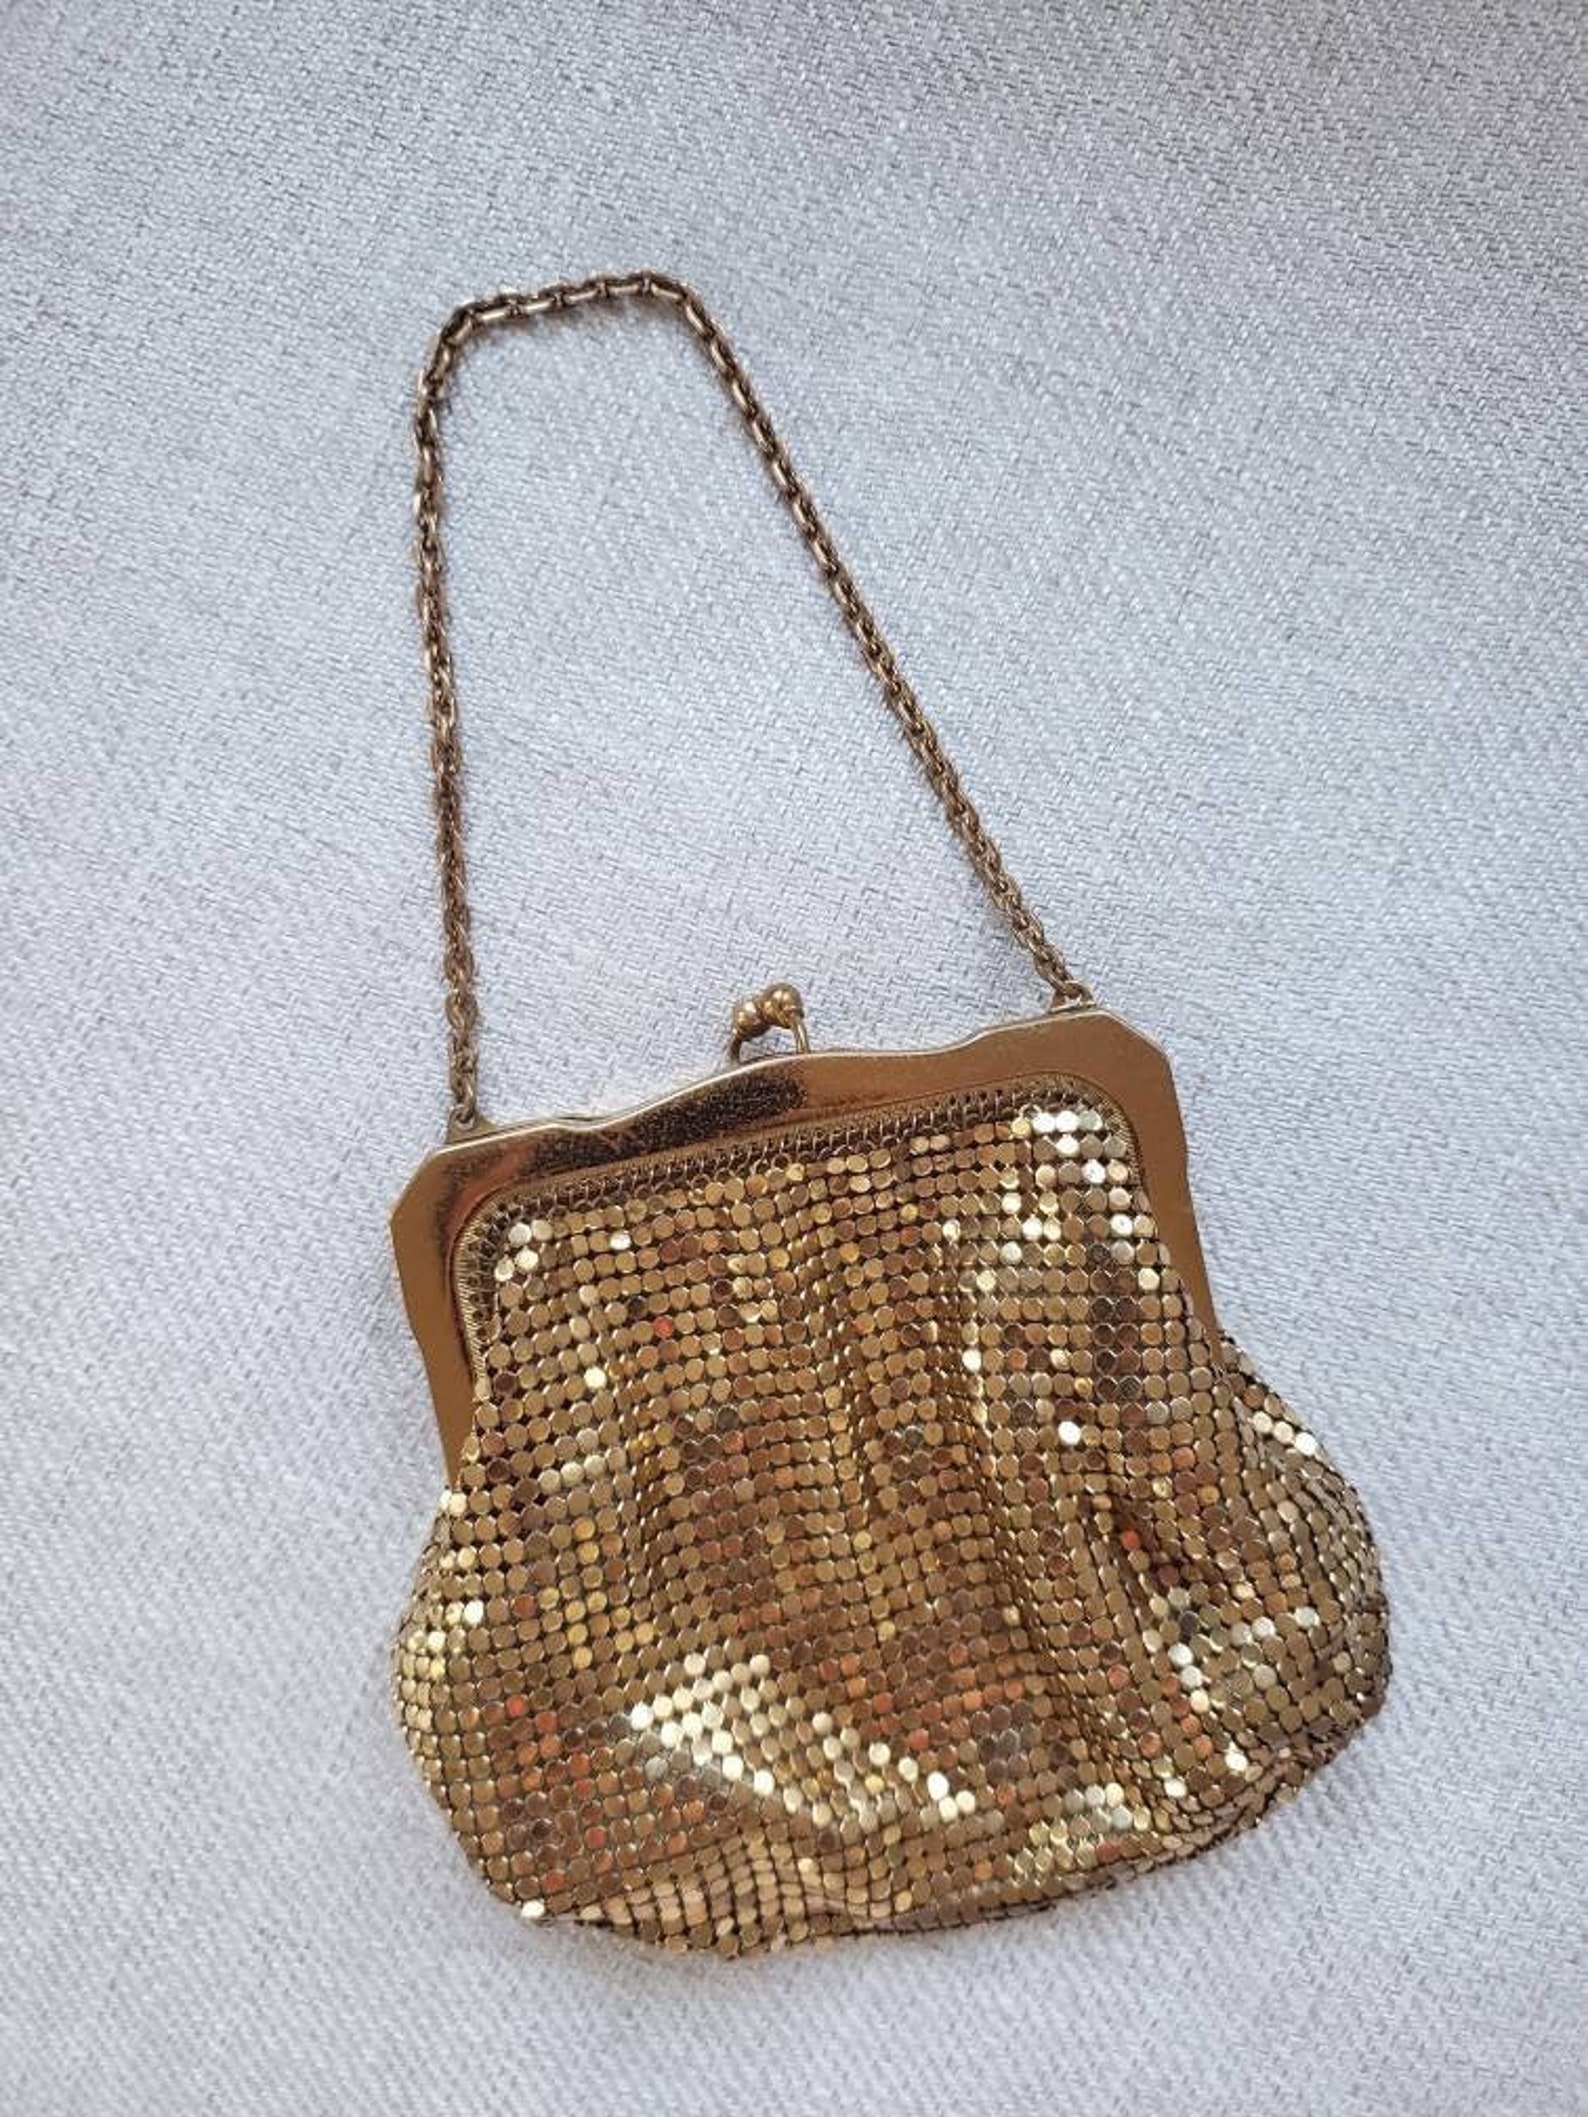 Vintage purse antique gold bag handbag art deco 1940s | Etsy